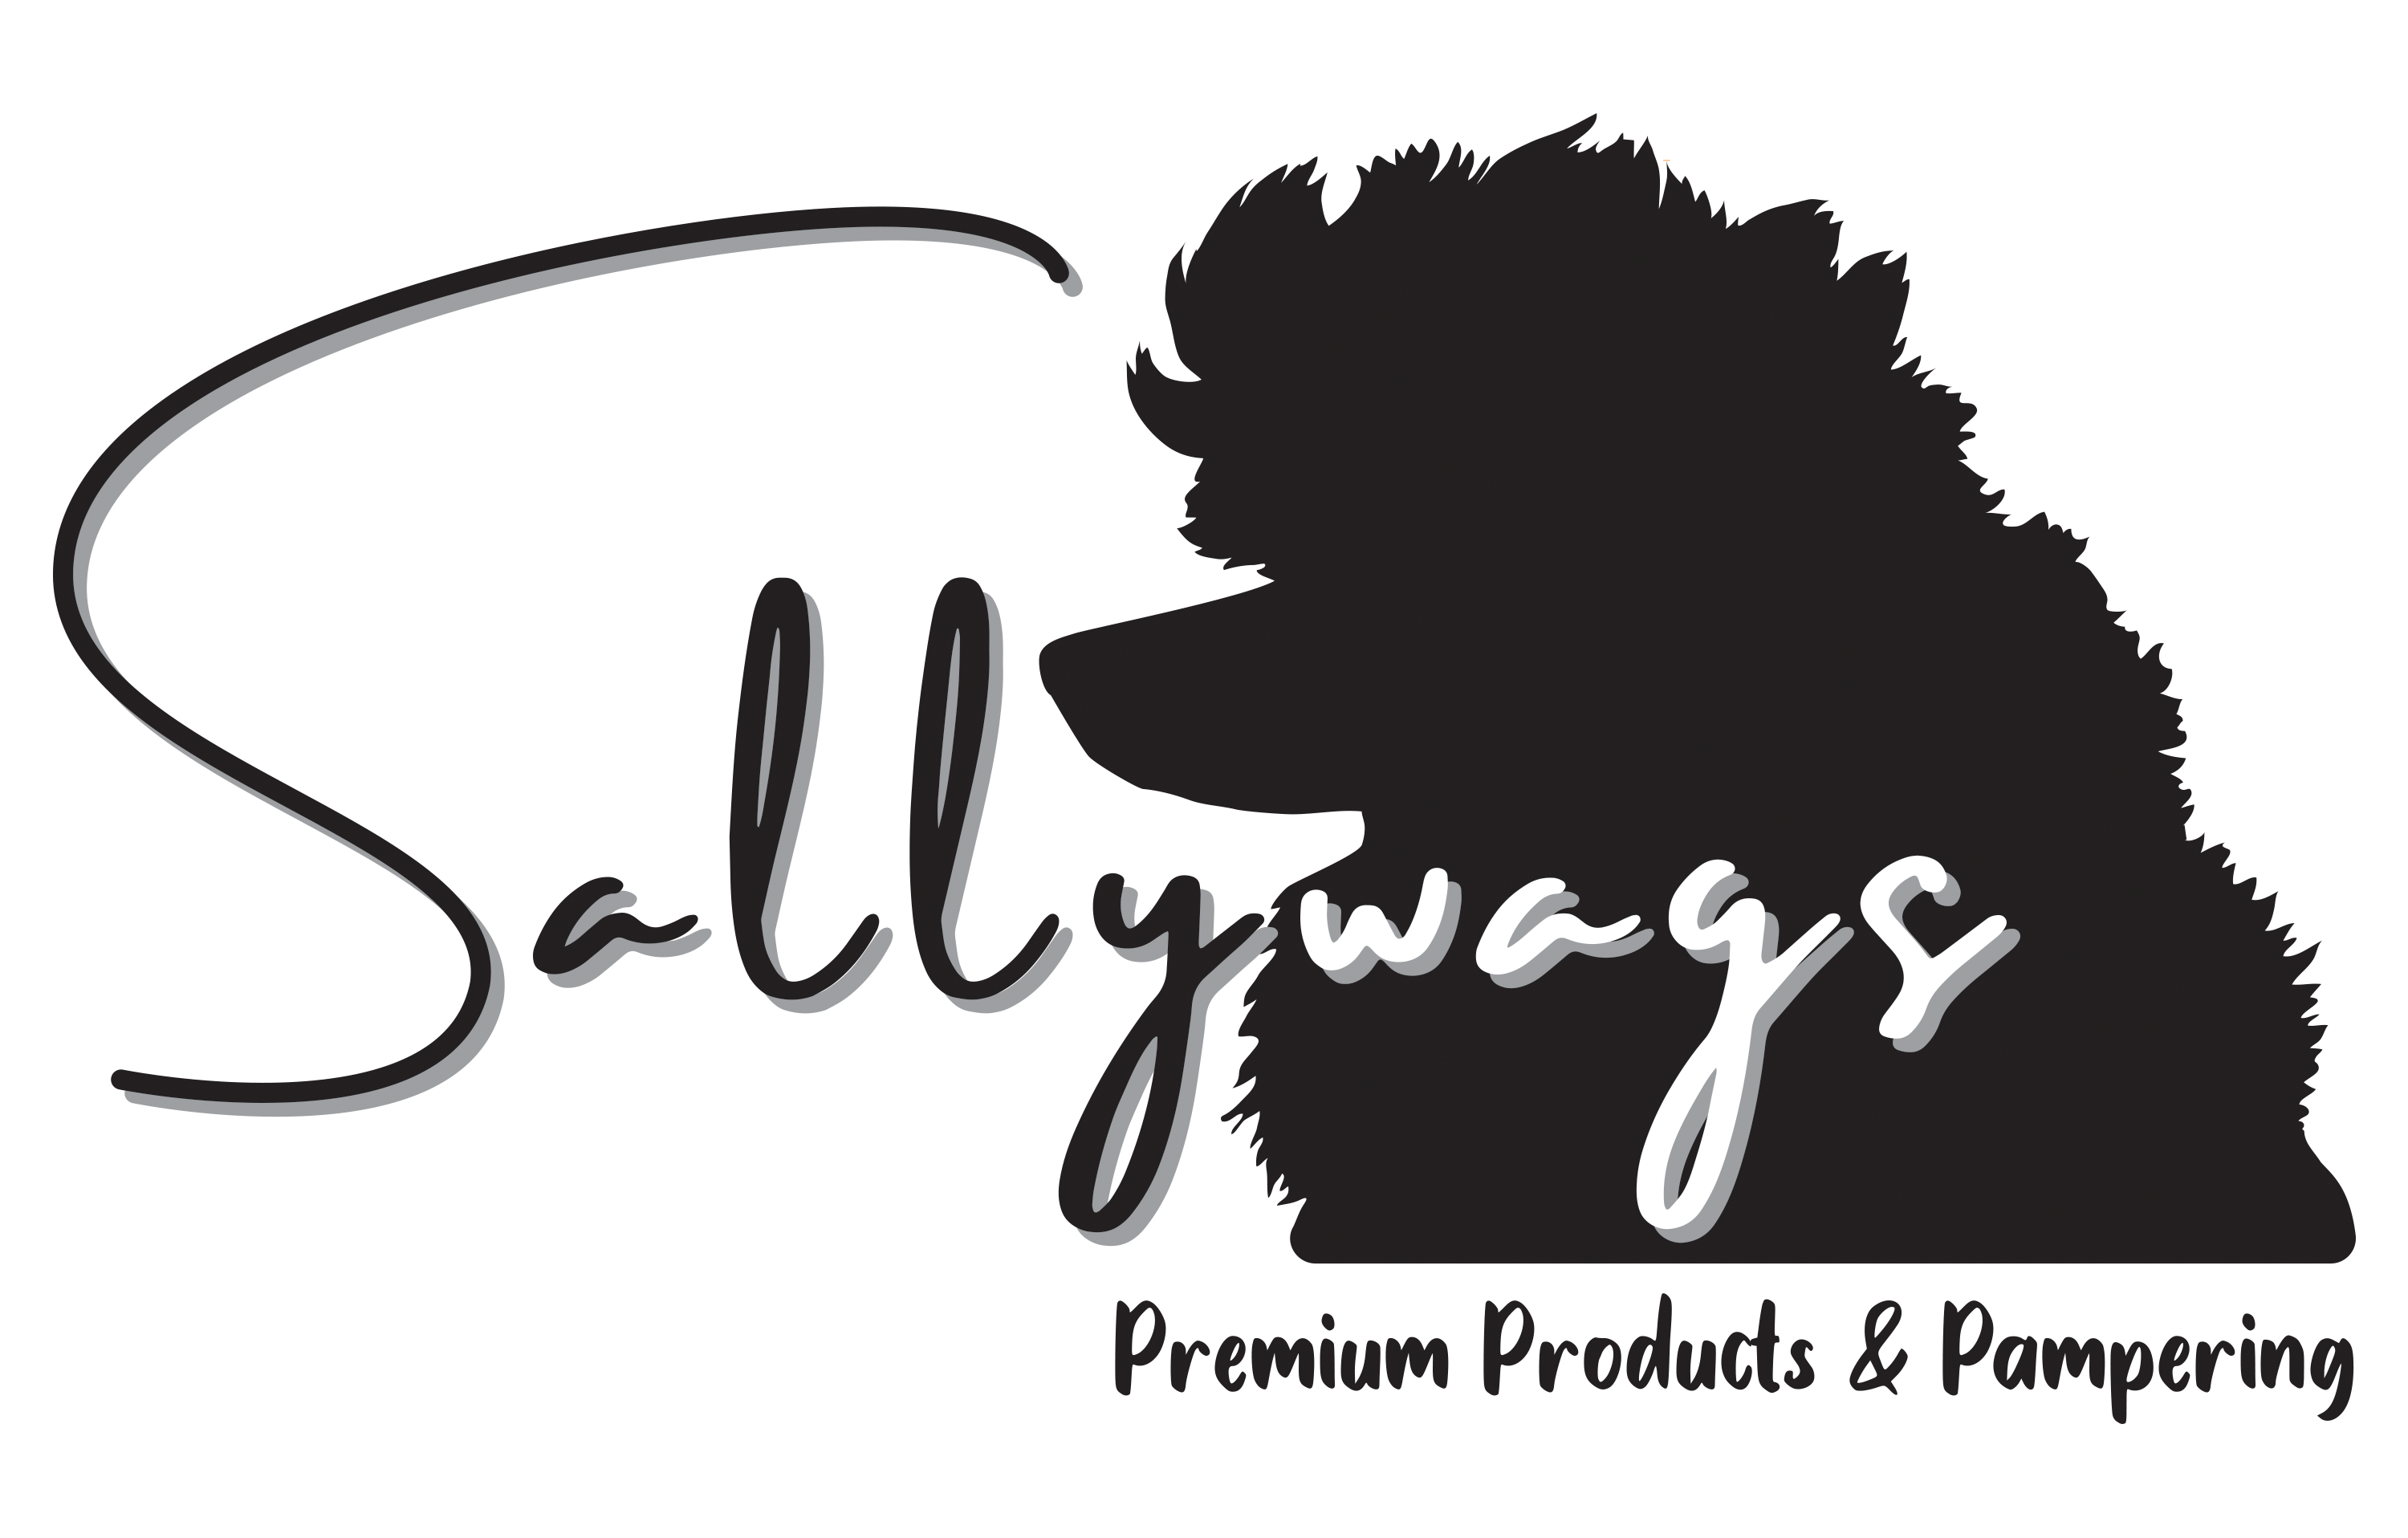 Sallywags Ltd